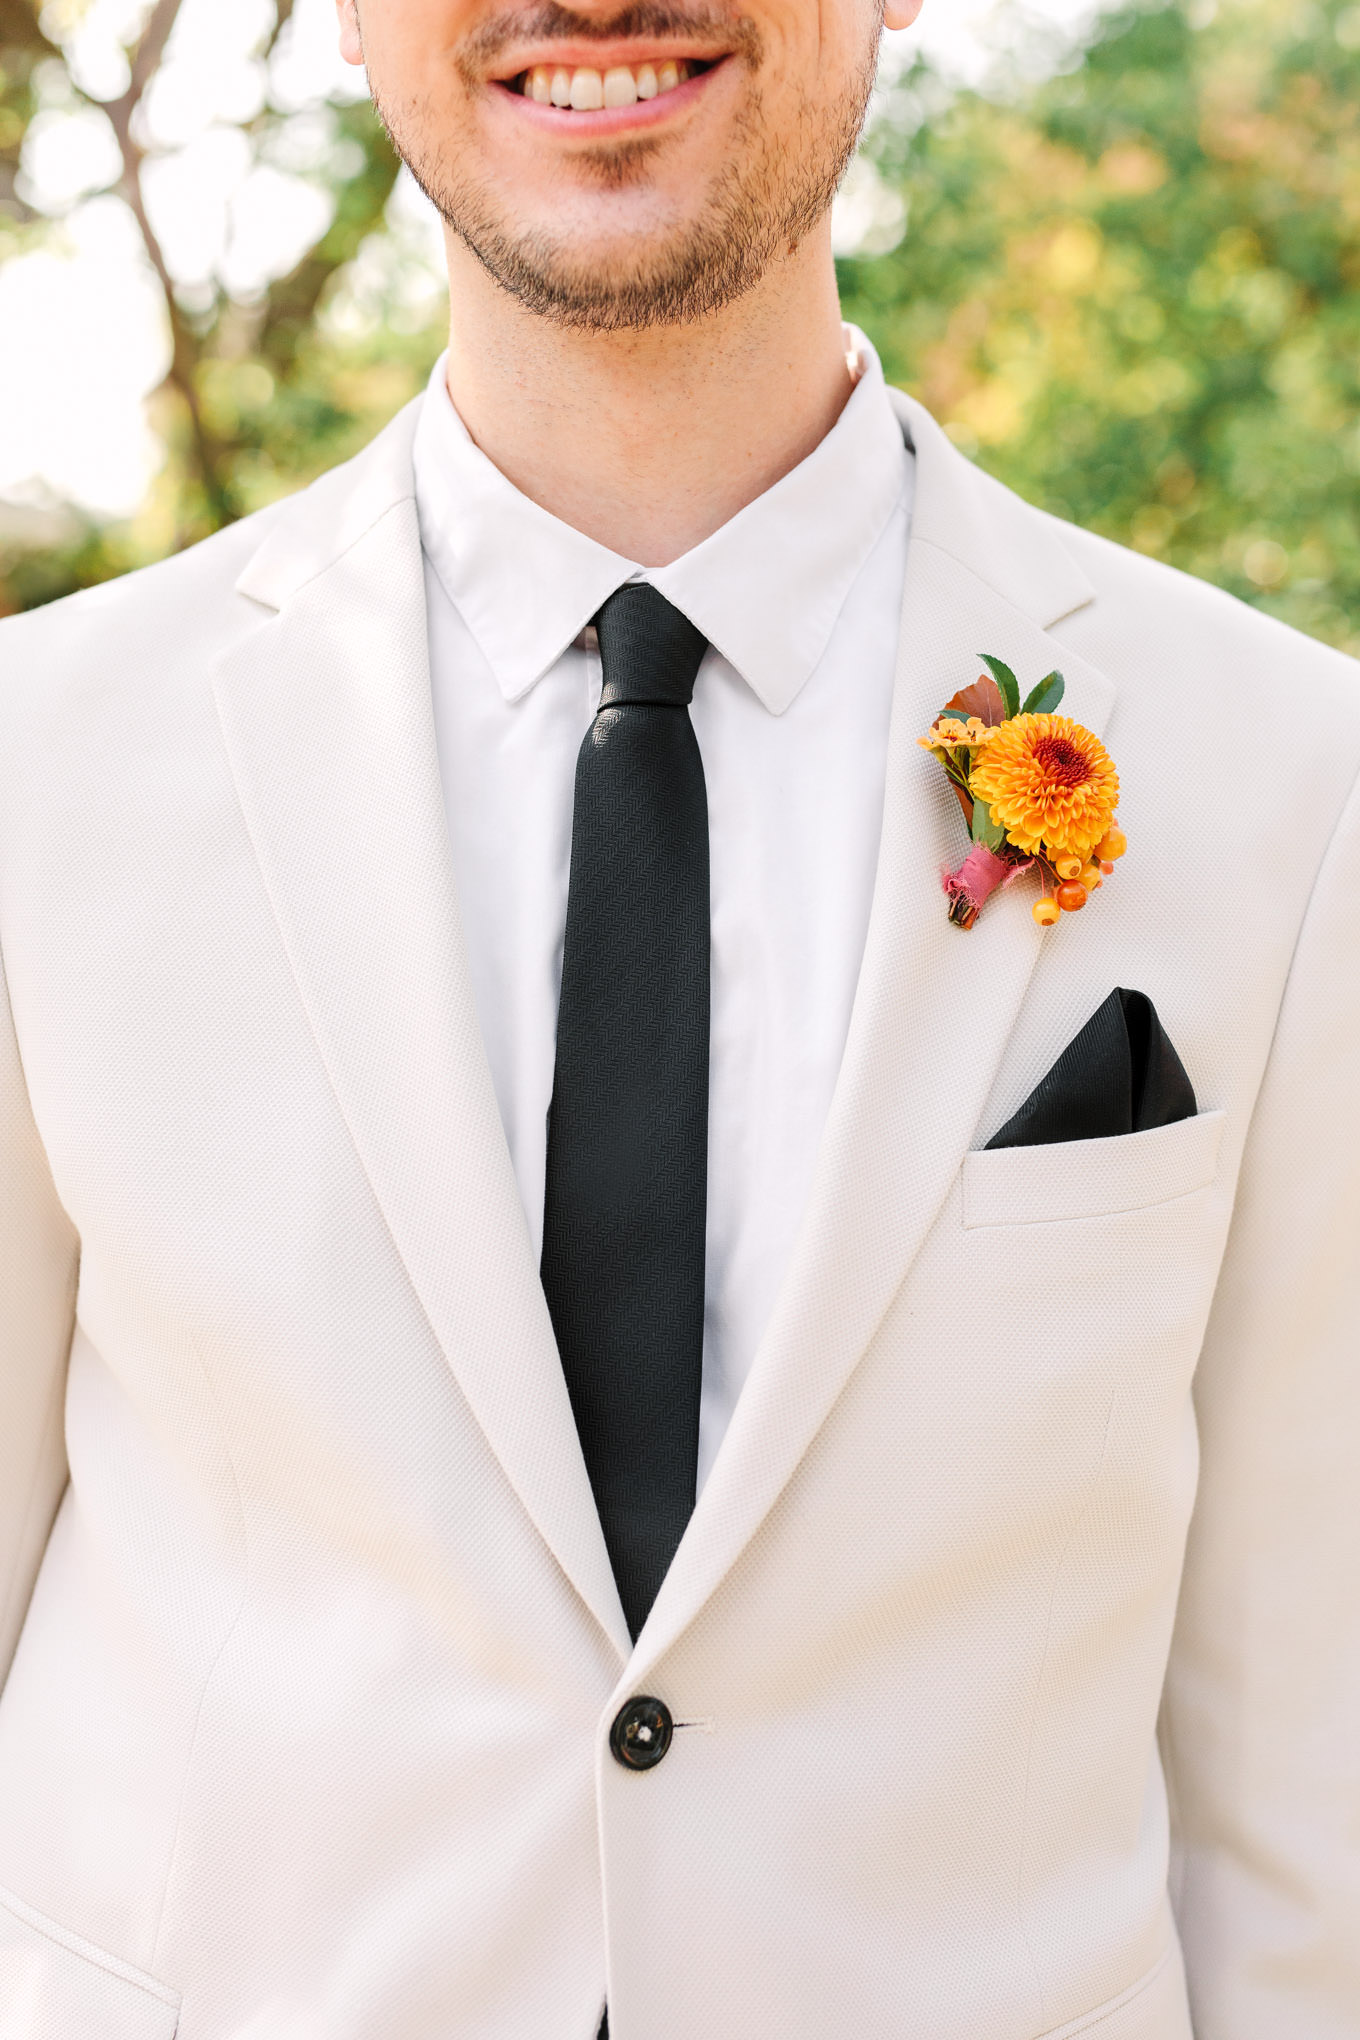 Groom portrait of suit | Vibrant backyard micro wedding featured on Green Wedding Shoes | Colorful LA wedding photography | #losangeleswedding #backyardwedding #microwedding #laweddingphotographer Source: Mary Costa Photography | Los Angeles